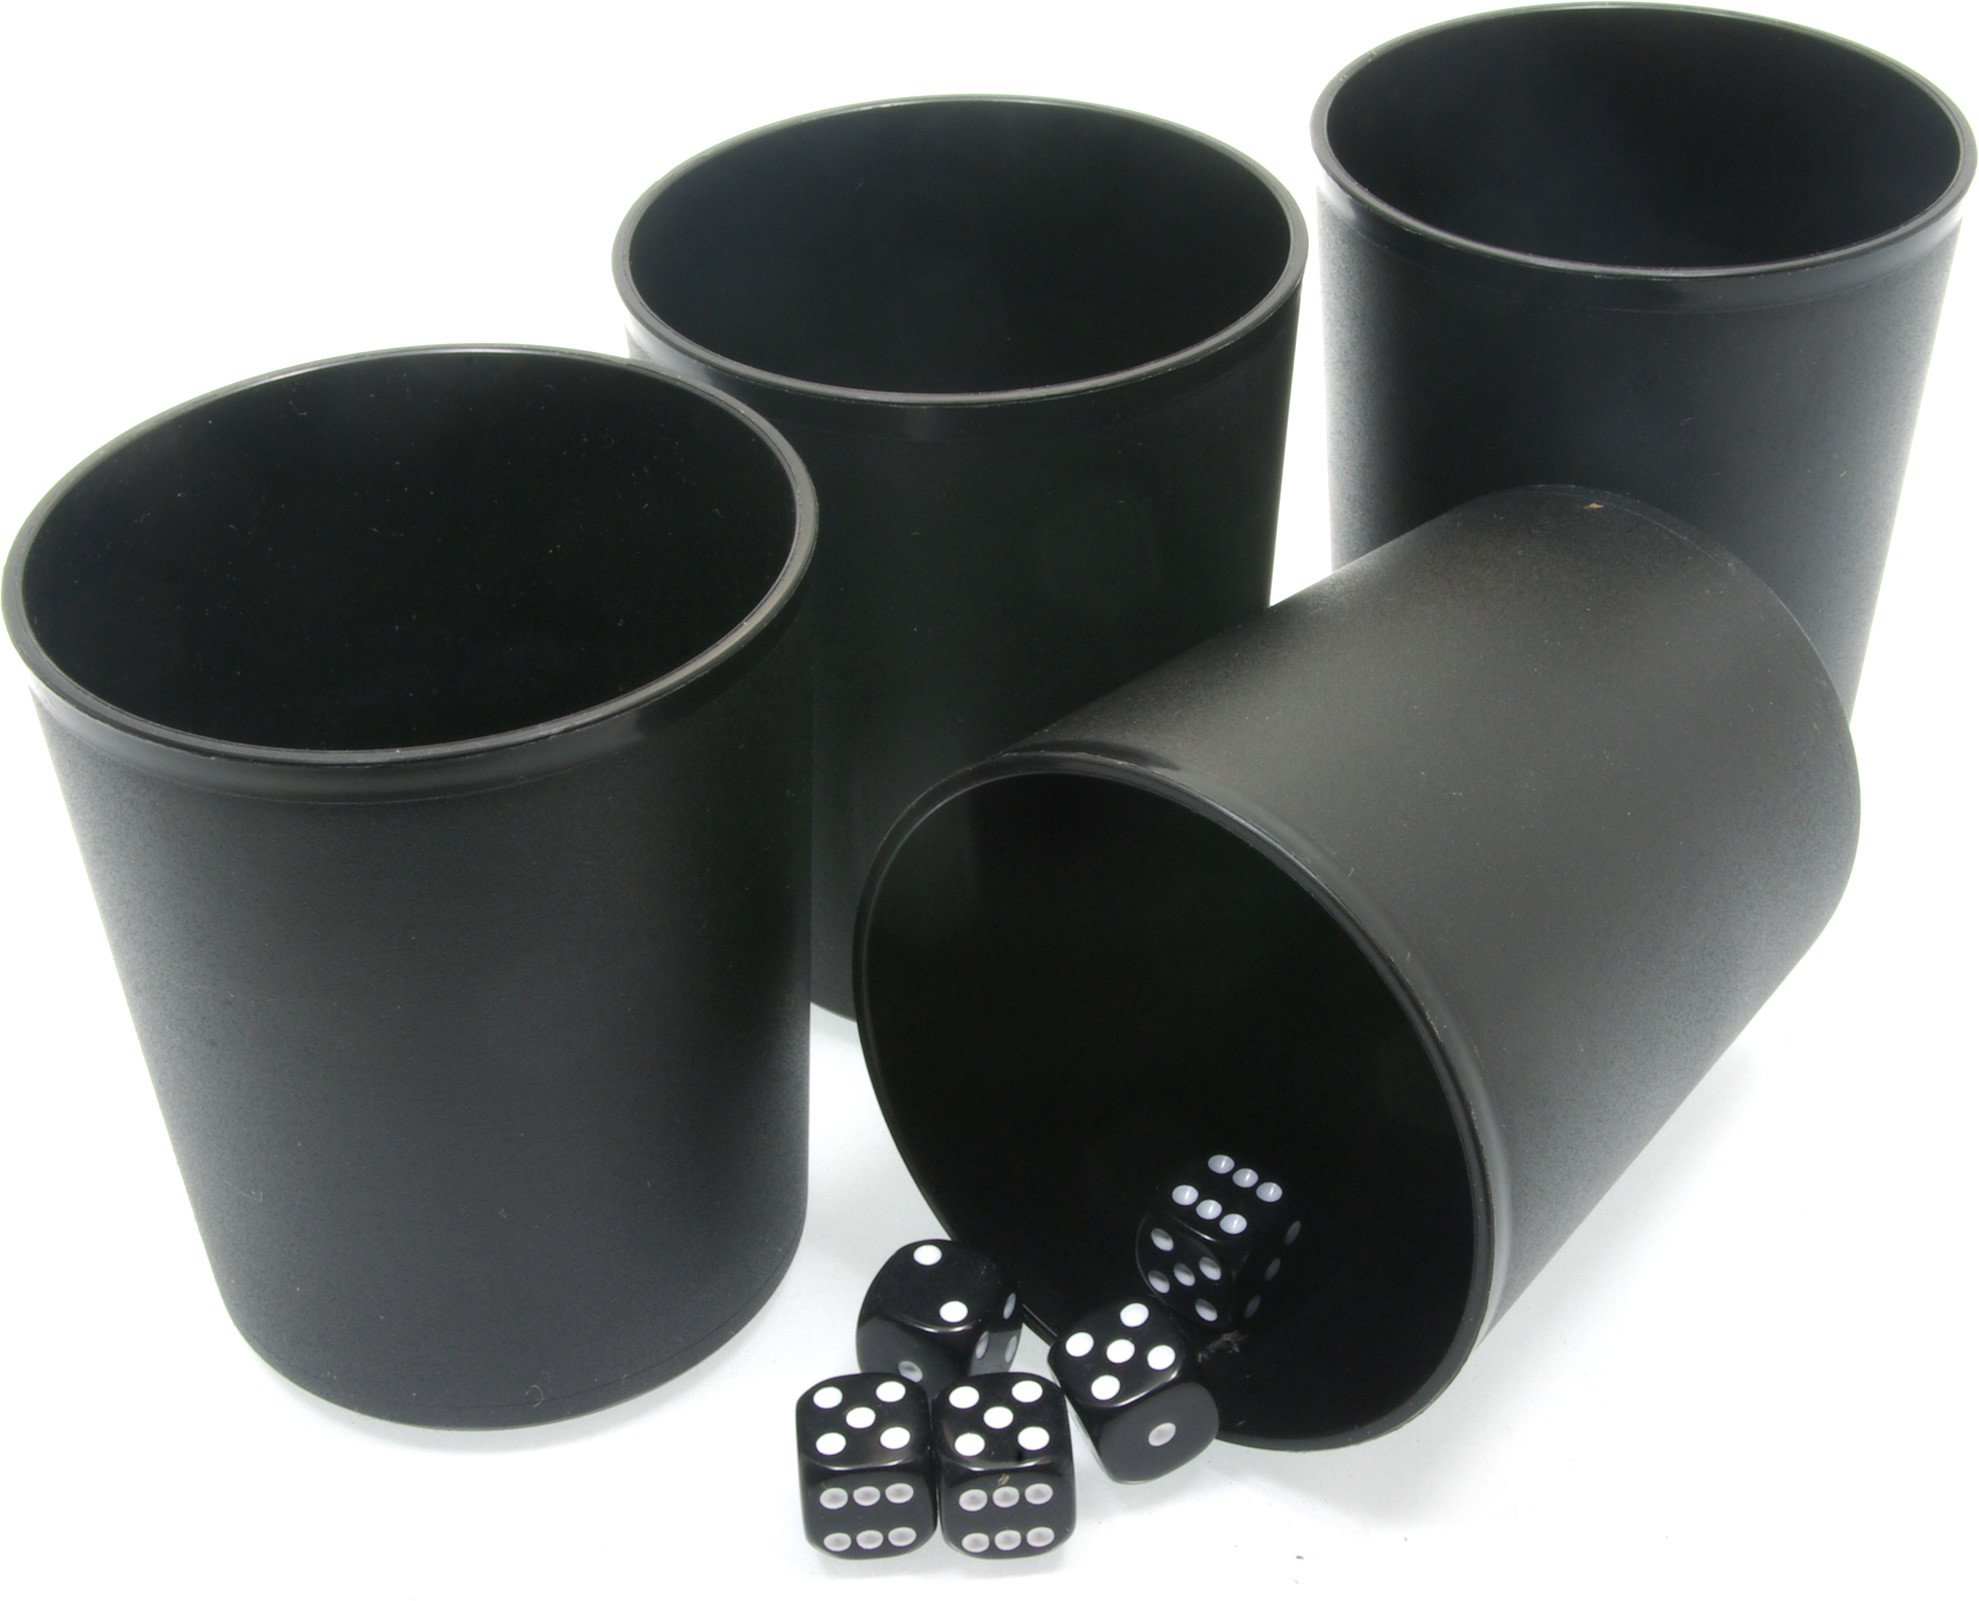 4 X black plastic dice cups with 5 dice